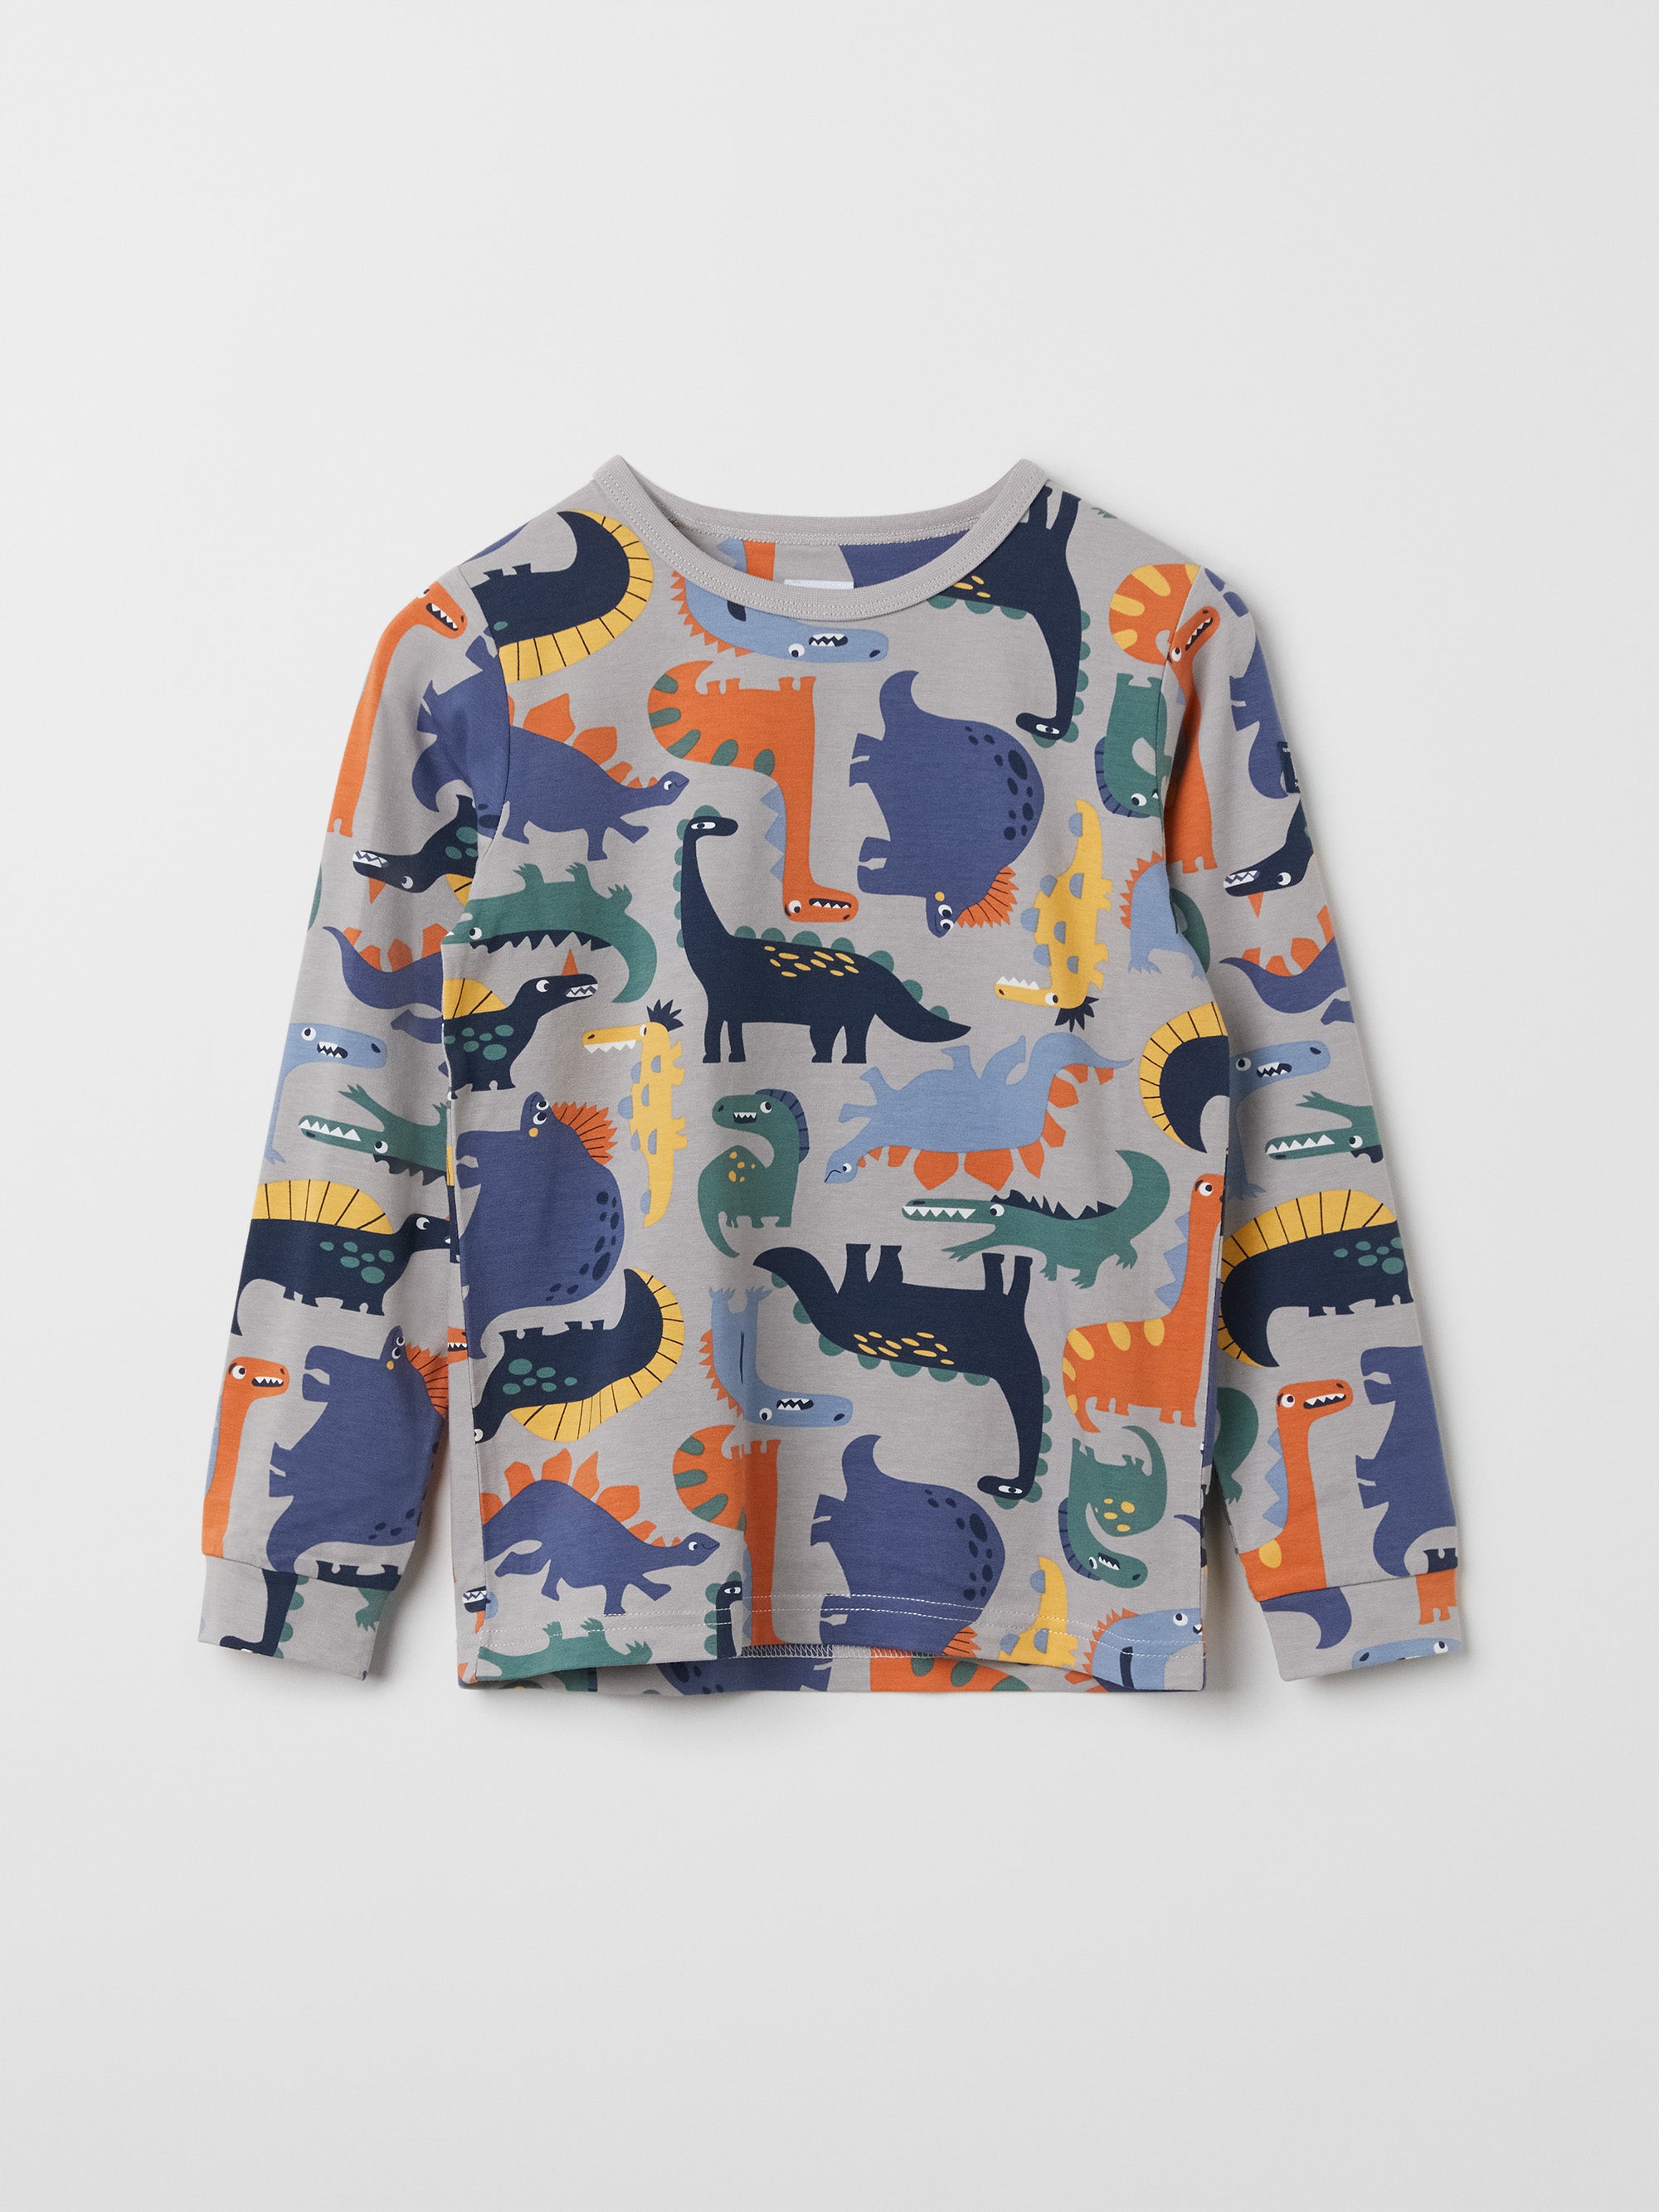 Dinosaur Print Kids Top